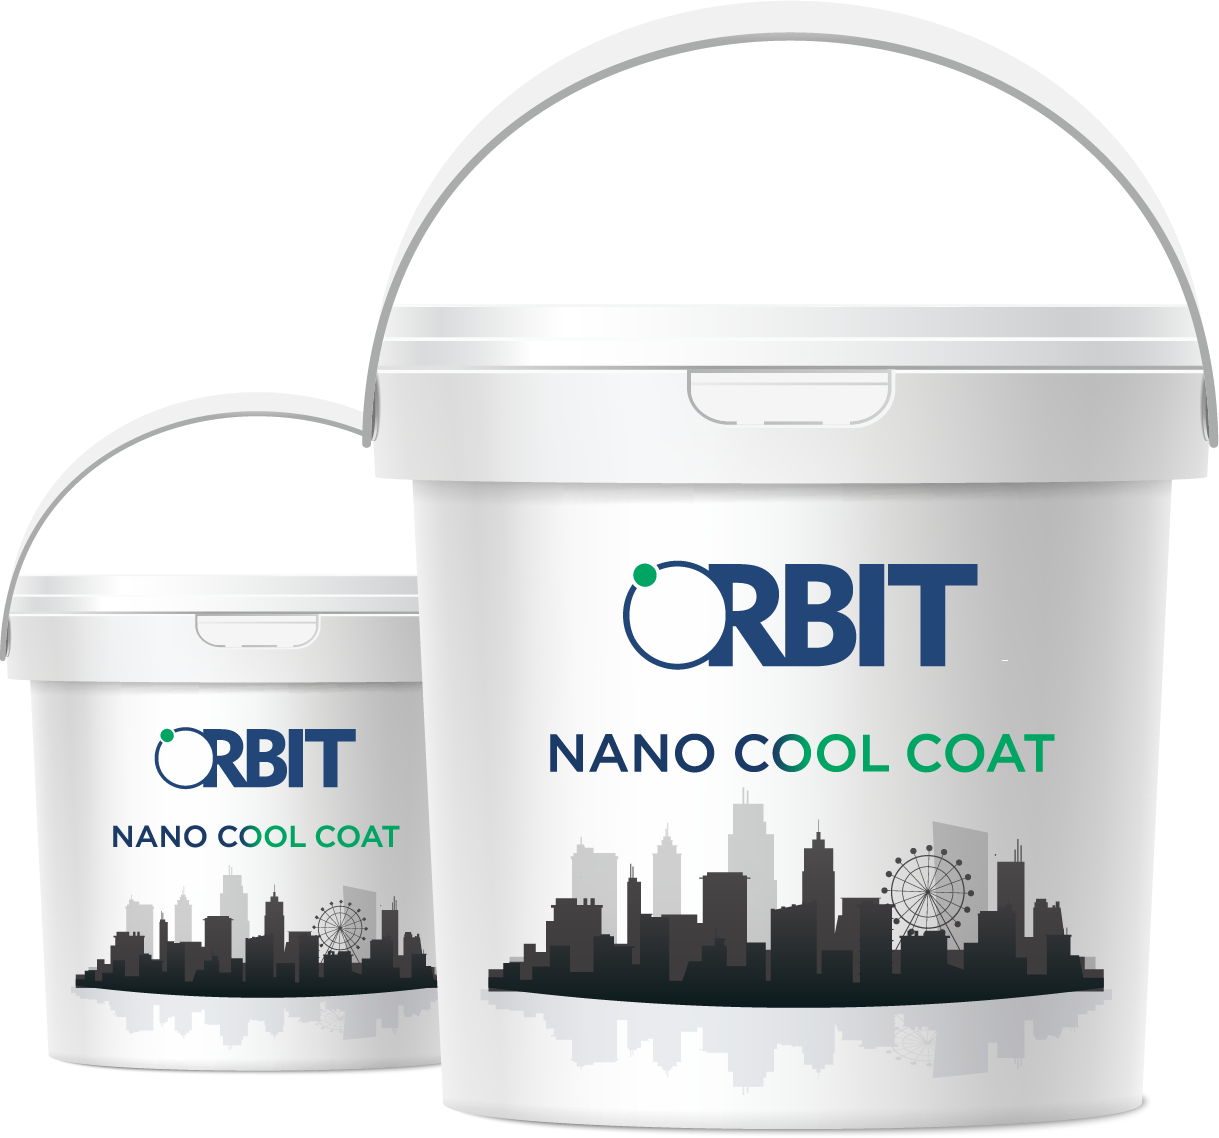 NanoCoolCoat